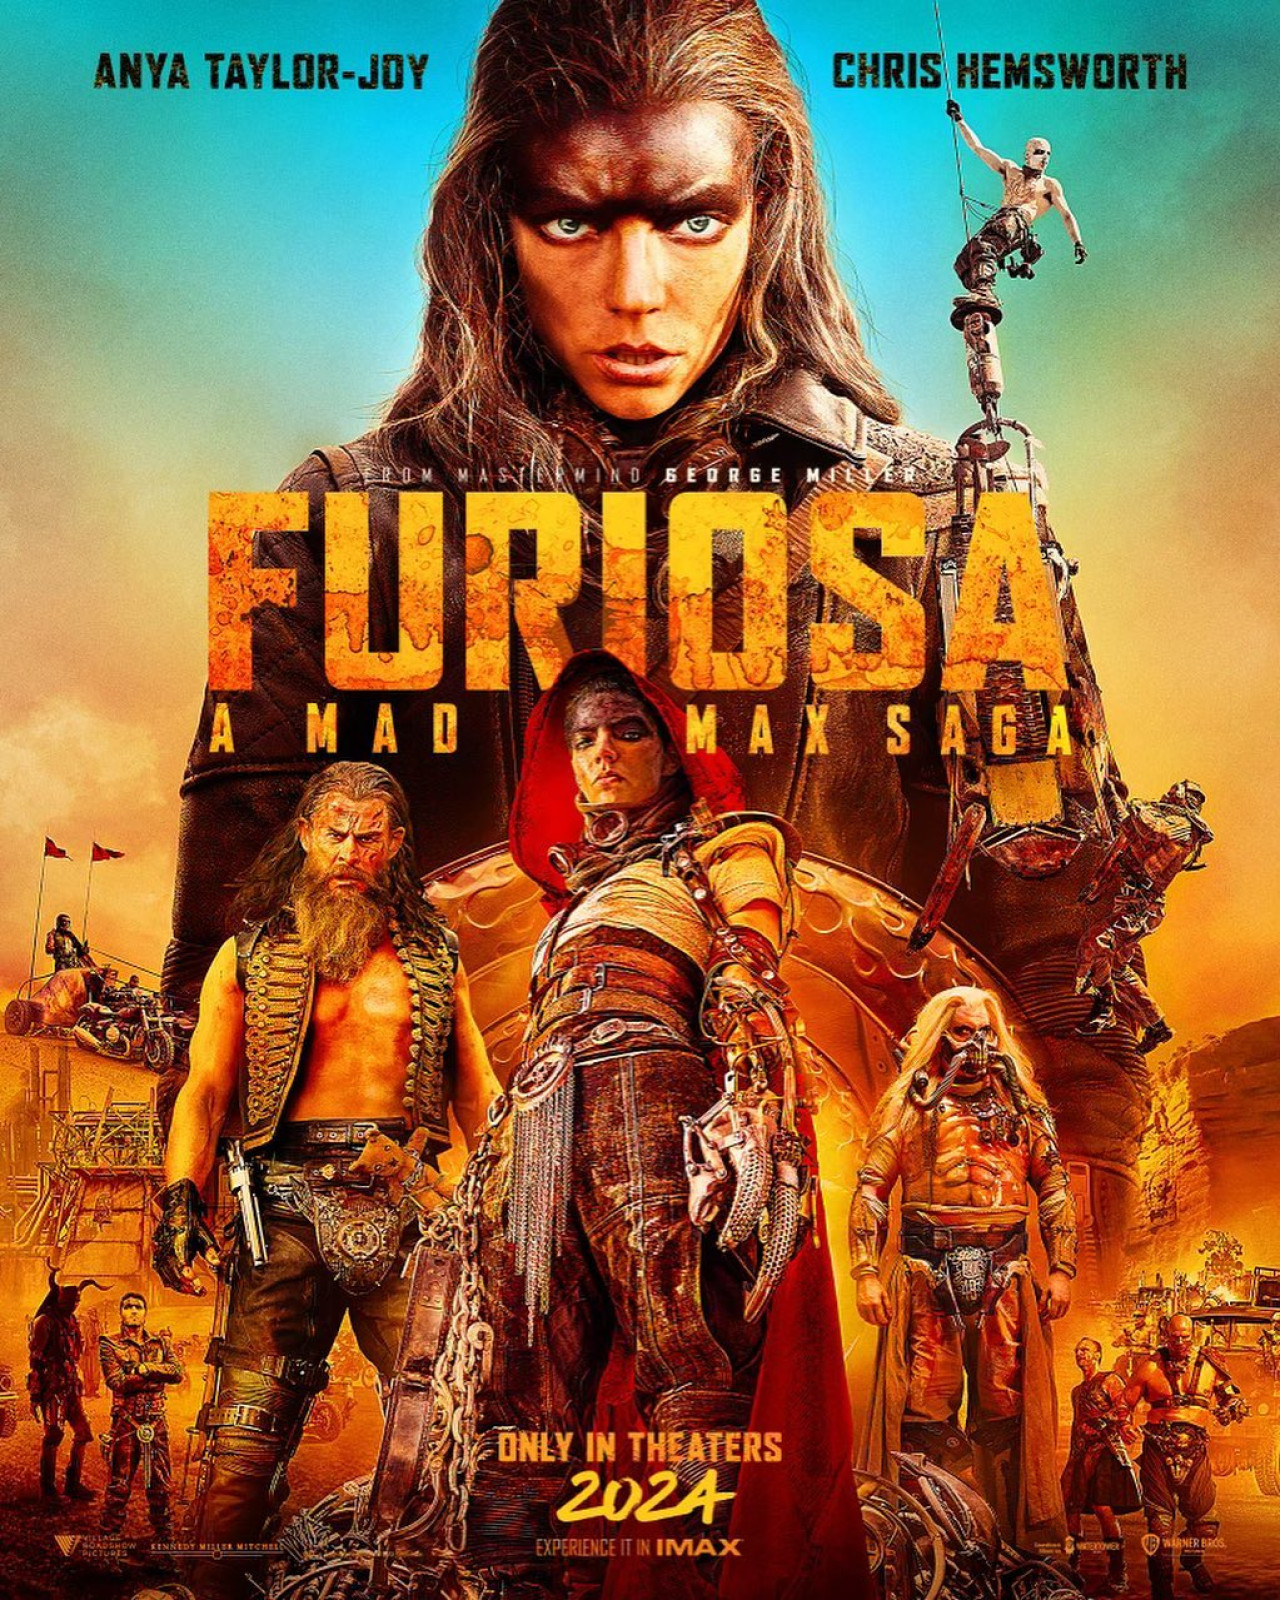 "Furiosa, de la saga Mad Max", la película que protagoniza Anya Taylor-Joy. Foto: Instagram.